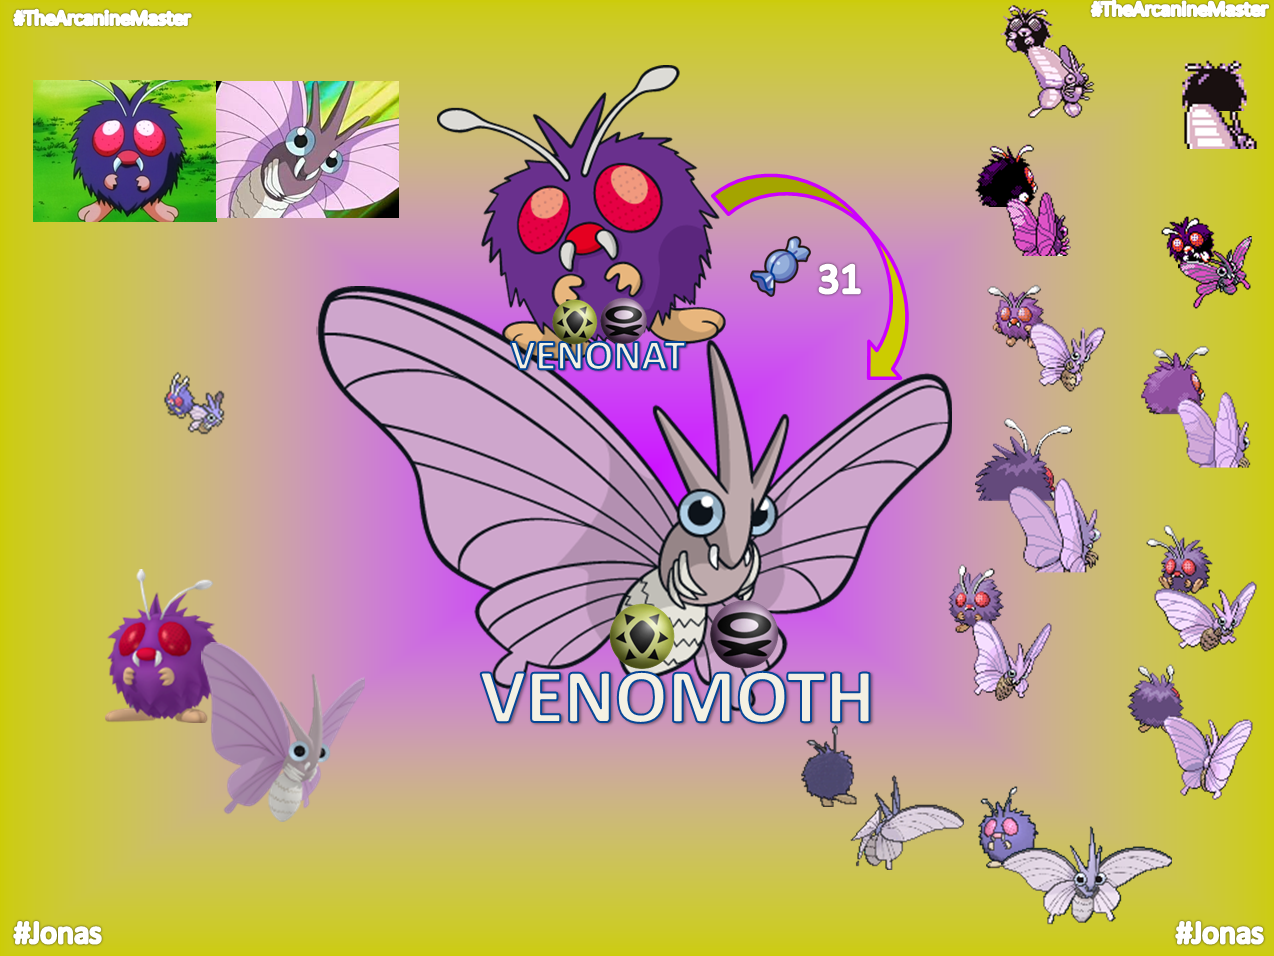 venomoth evolution chart